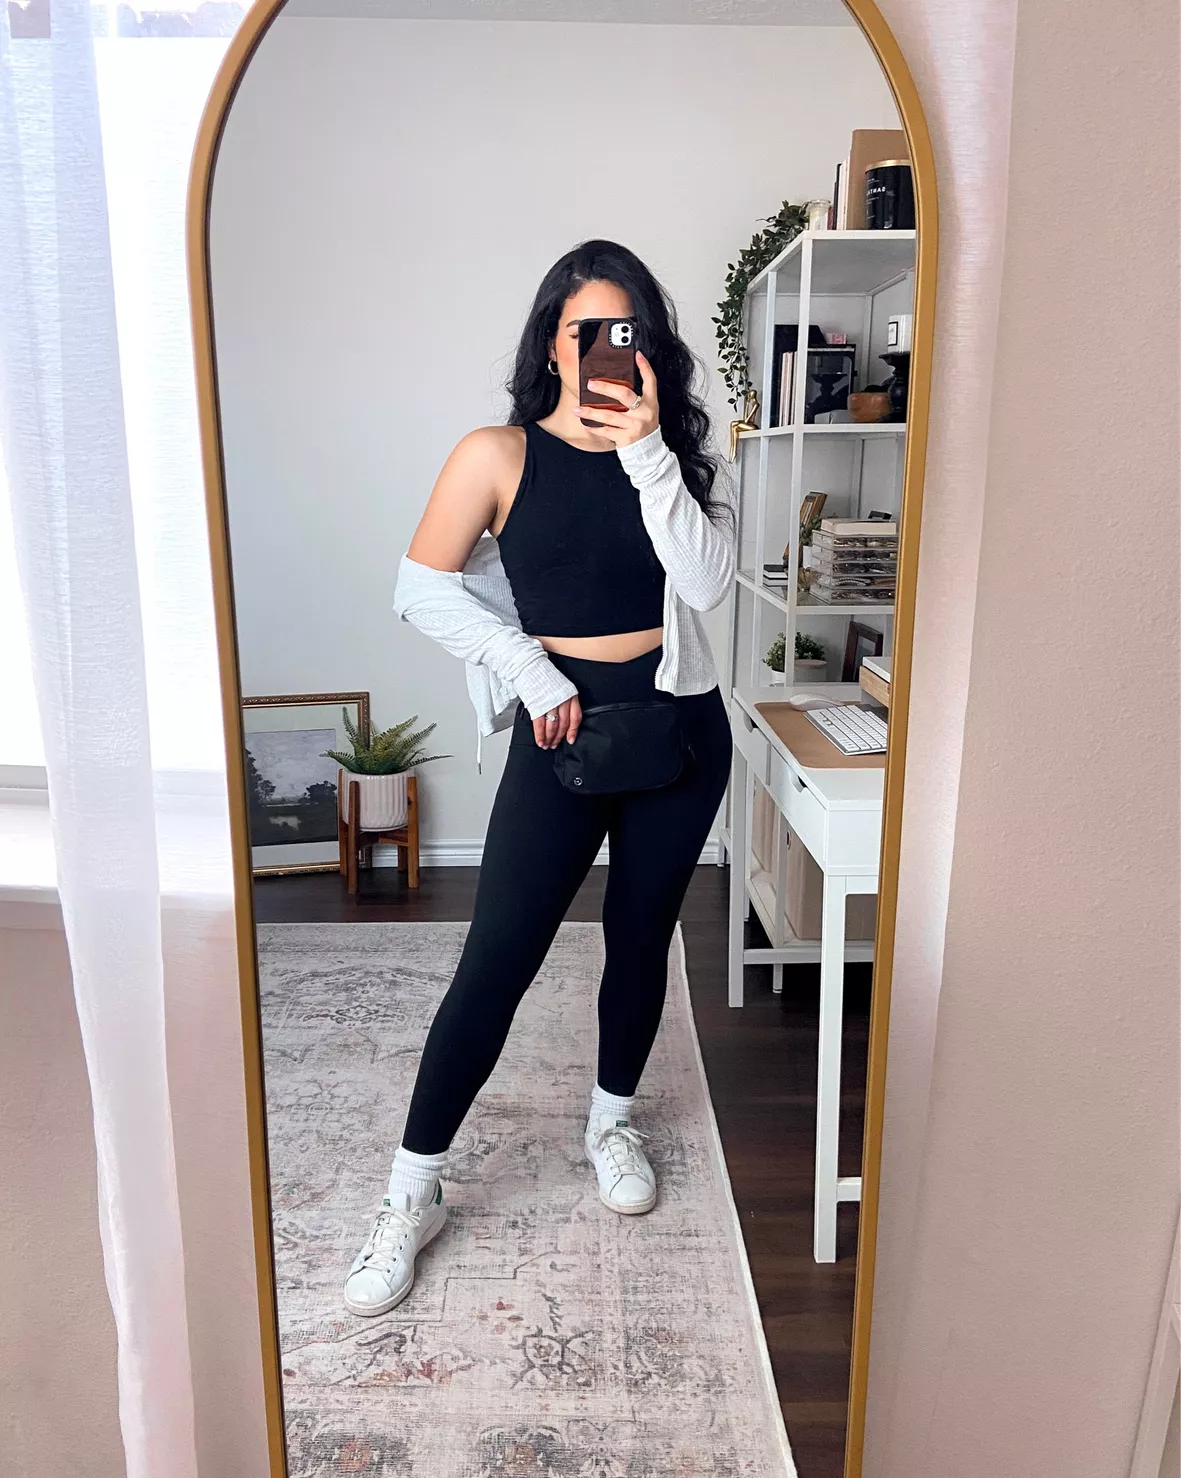 Stylish Workout Outfit: White Jacket and Black Leggings